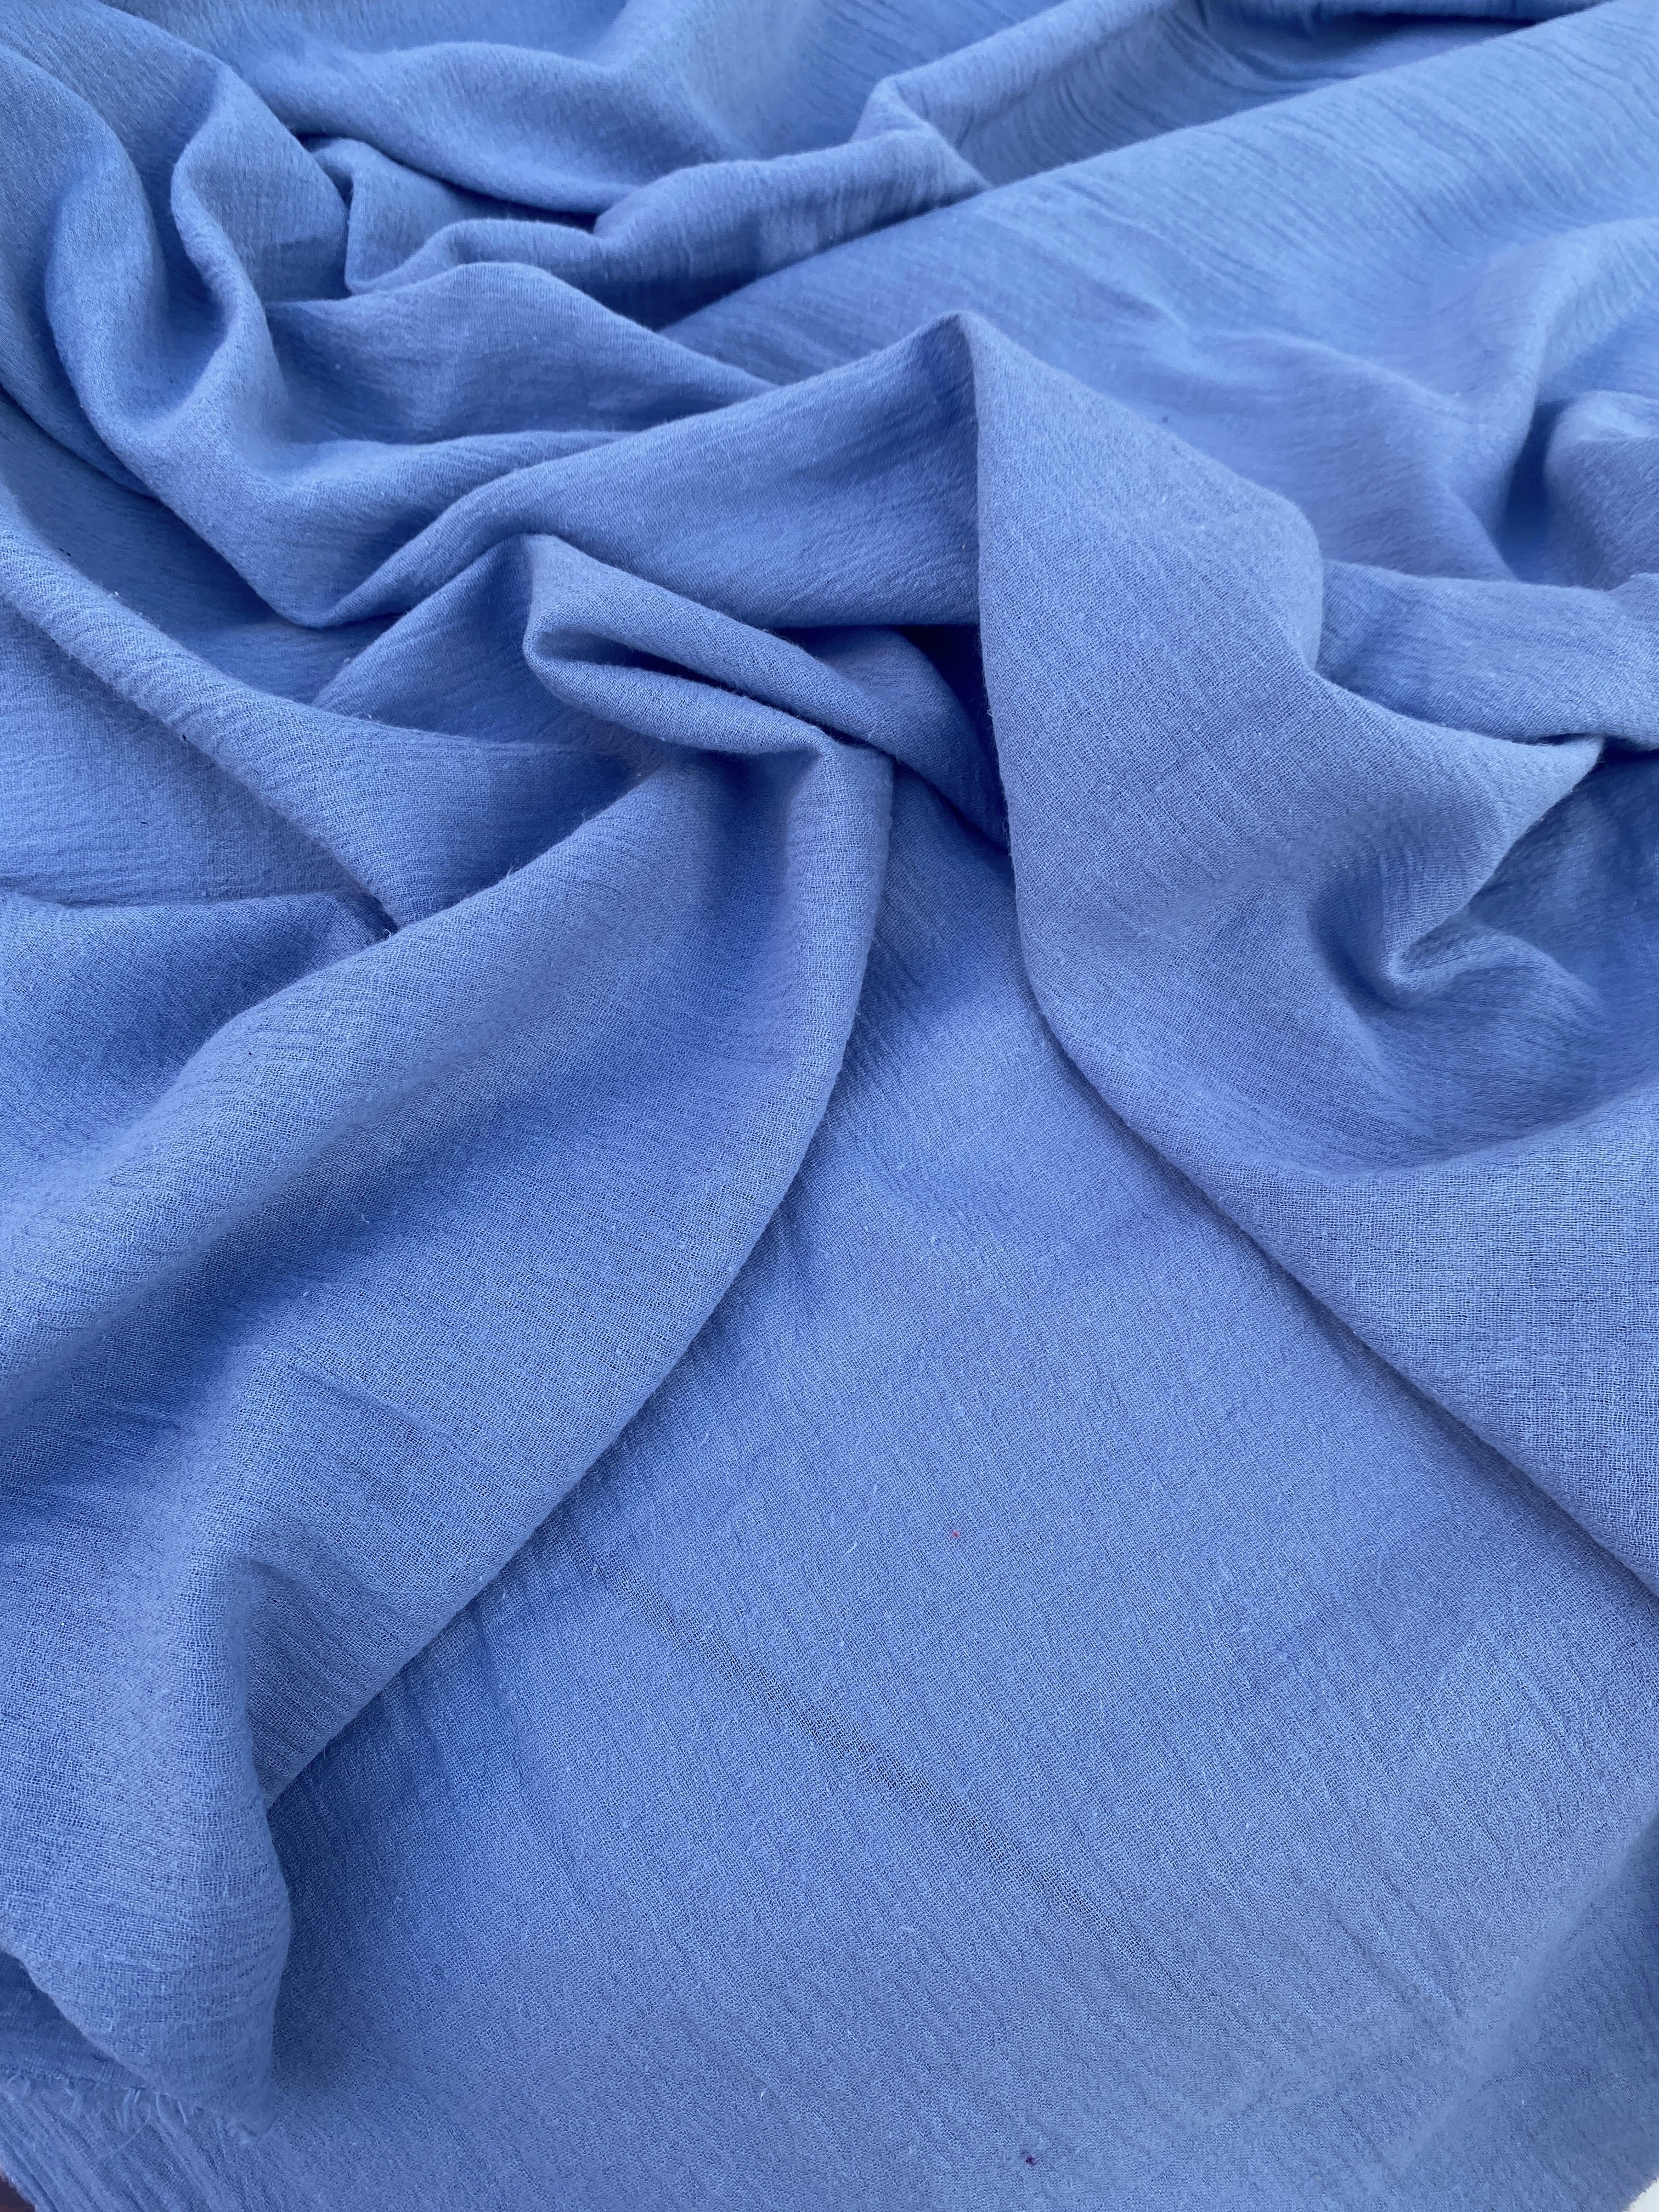 Denim Blue Muslin Crinkle Gauze Fabric, Dusty Blue Cotton Gauze Swaddle Fabric, Fabric for Babies, Swaddle, dresses, Blue Cheesecloth Fabric